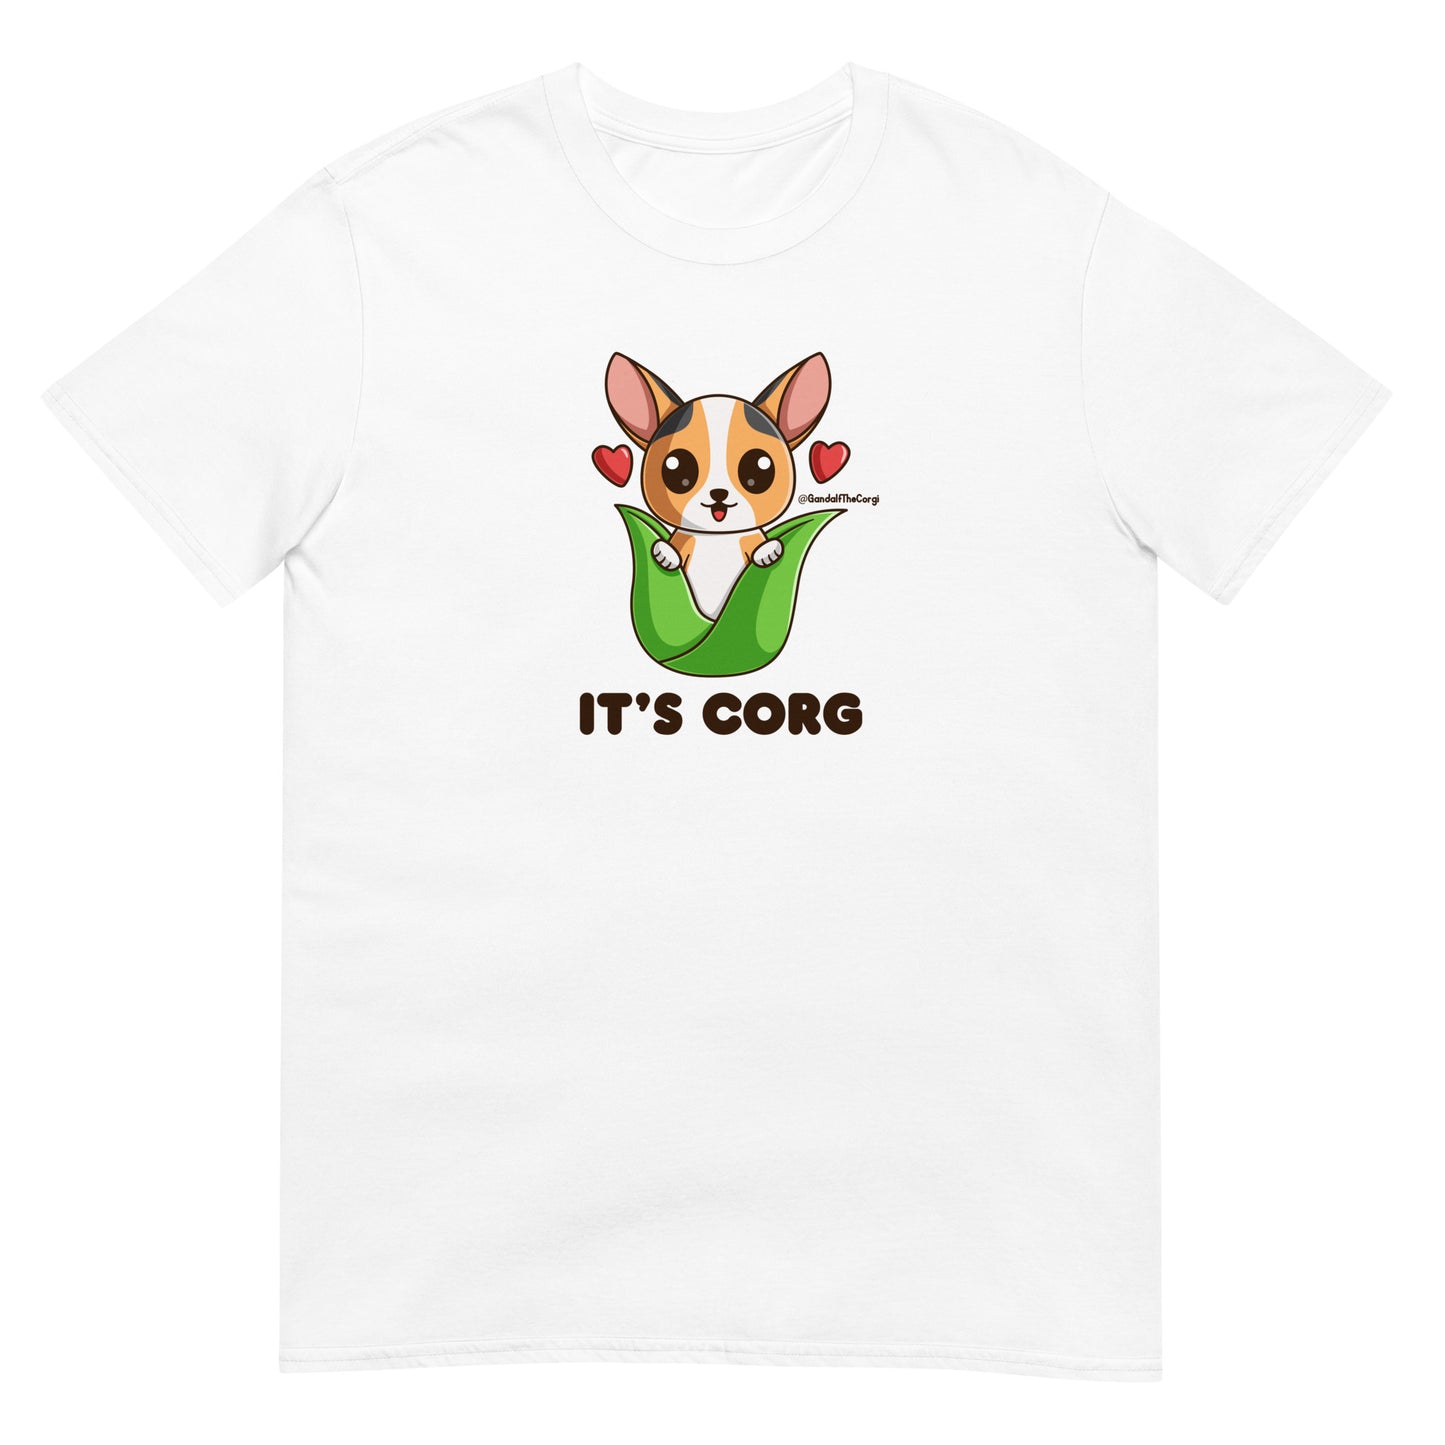 It's Corg! The Corgi Anthem - Dark Font - Short-Sleeve Unisex T-Shirt